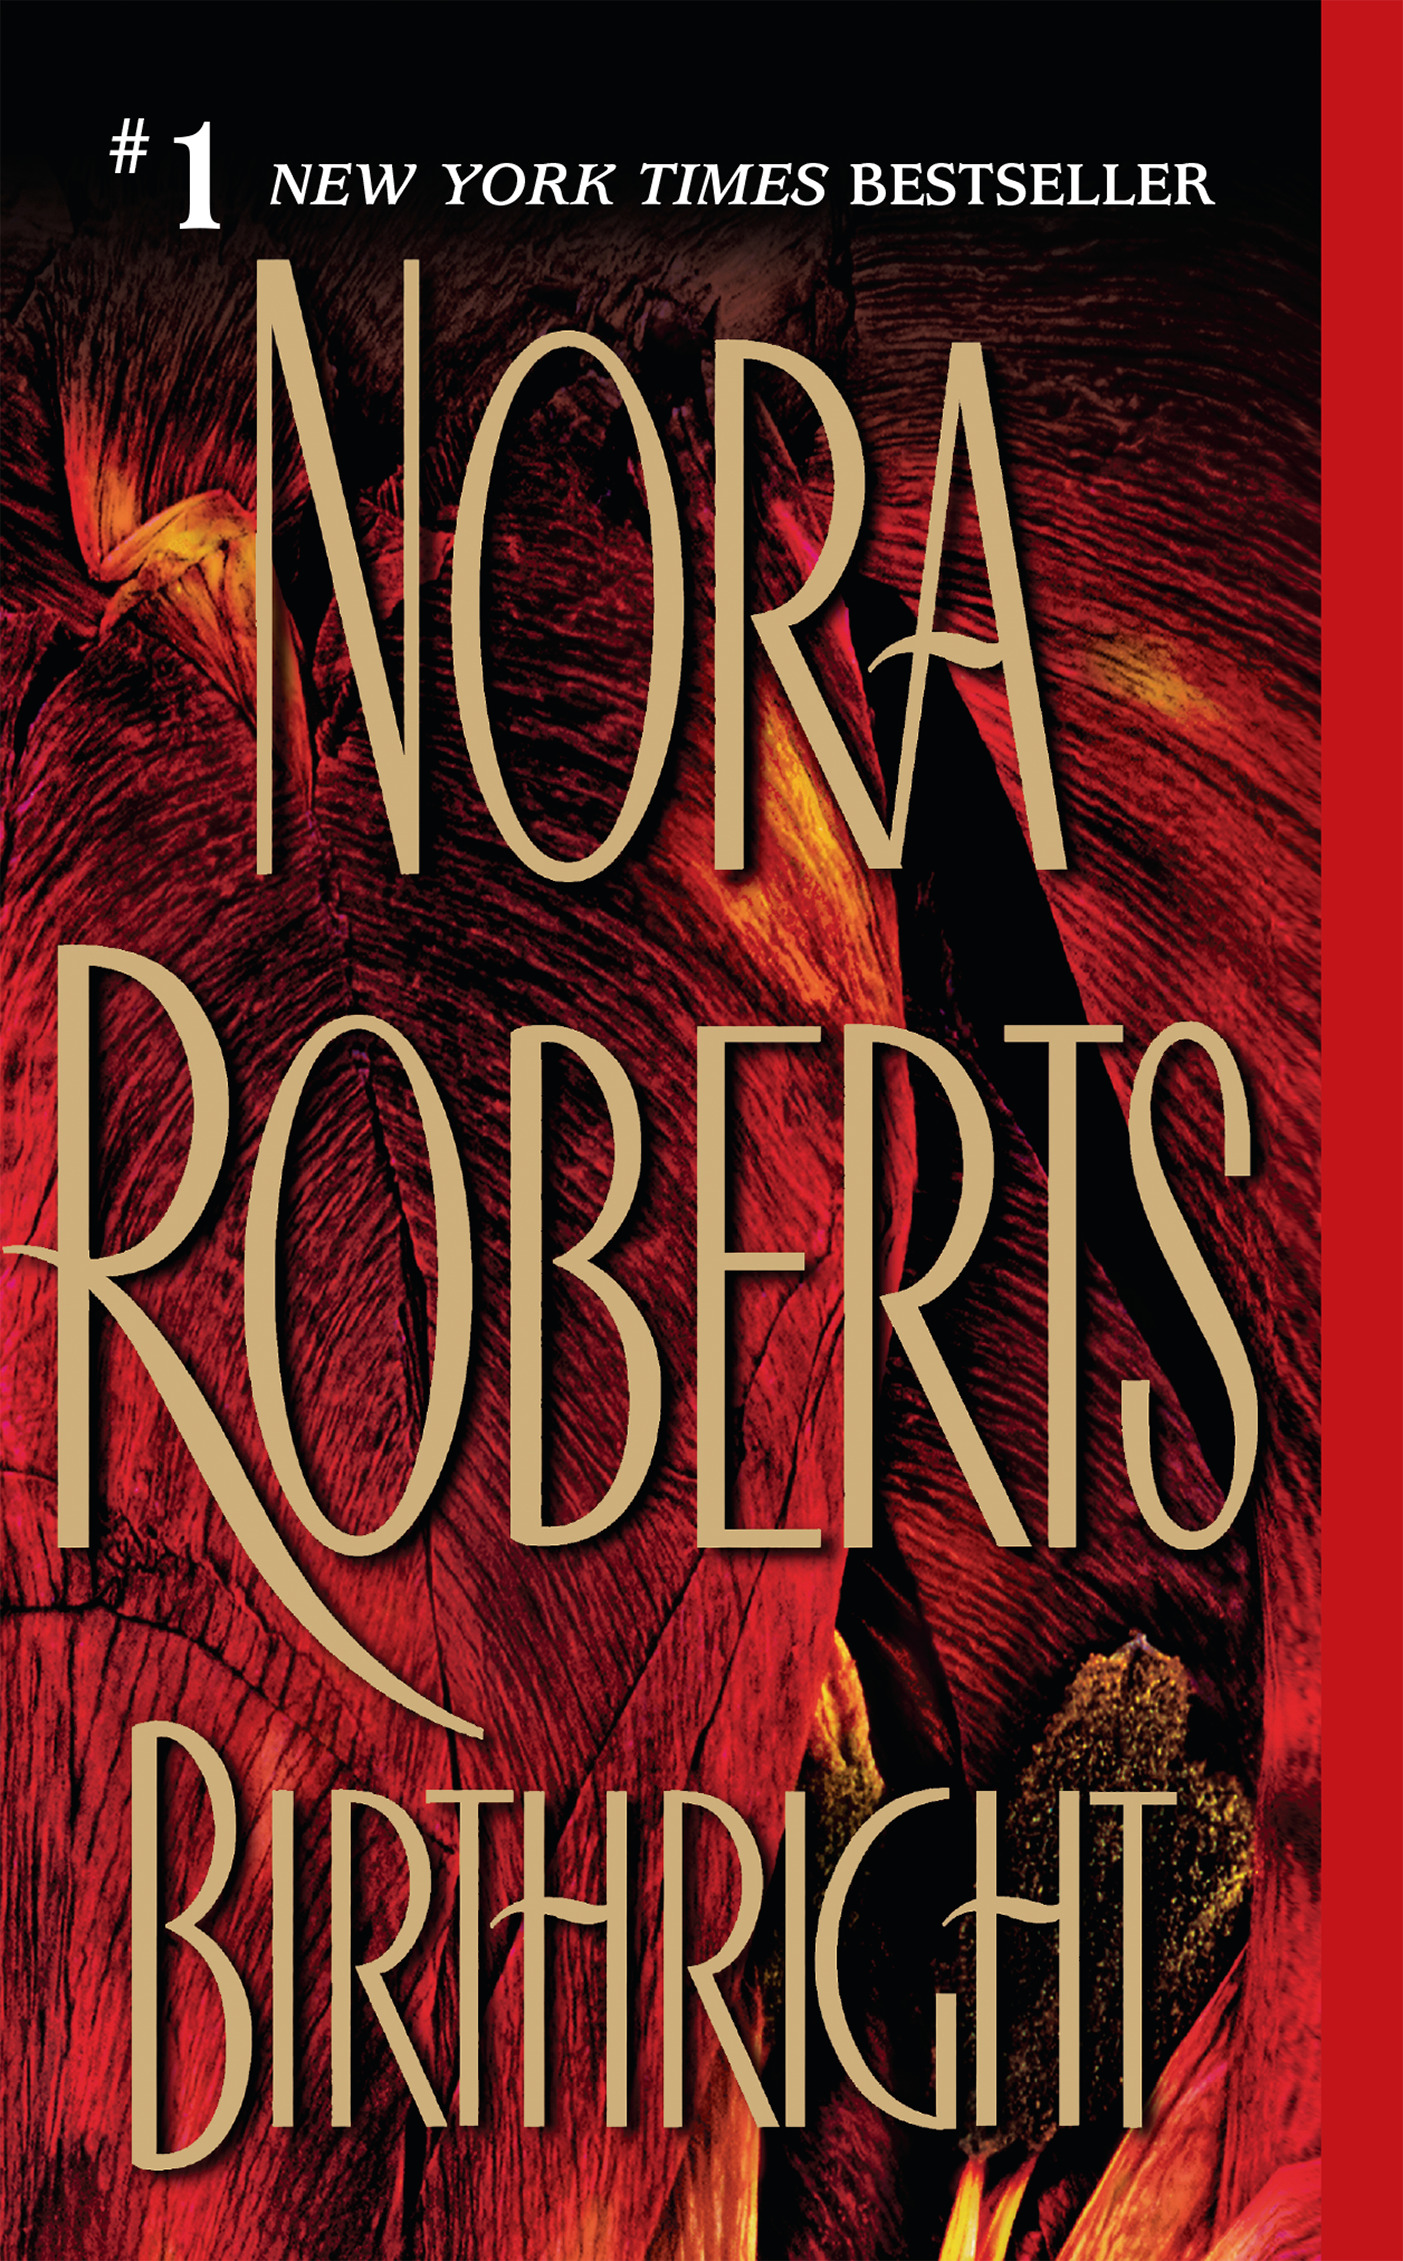 Birthright | Roberts, Nora (Auteur)